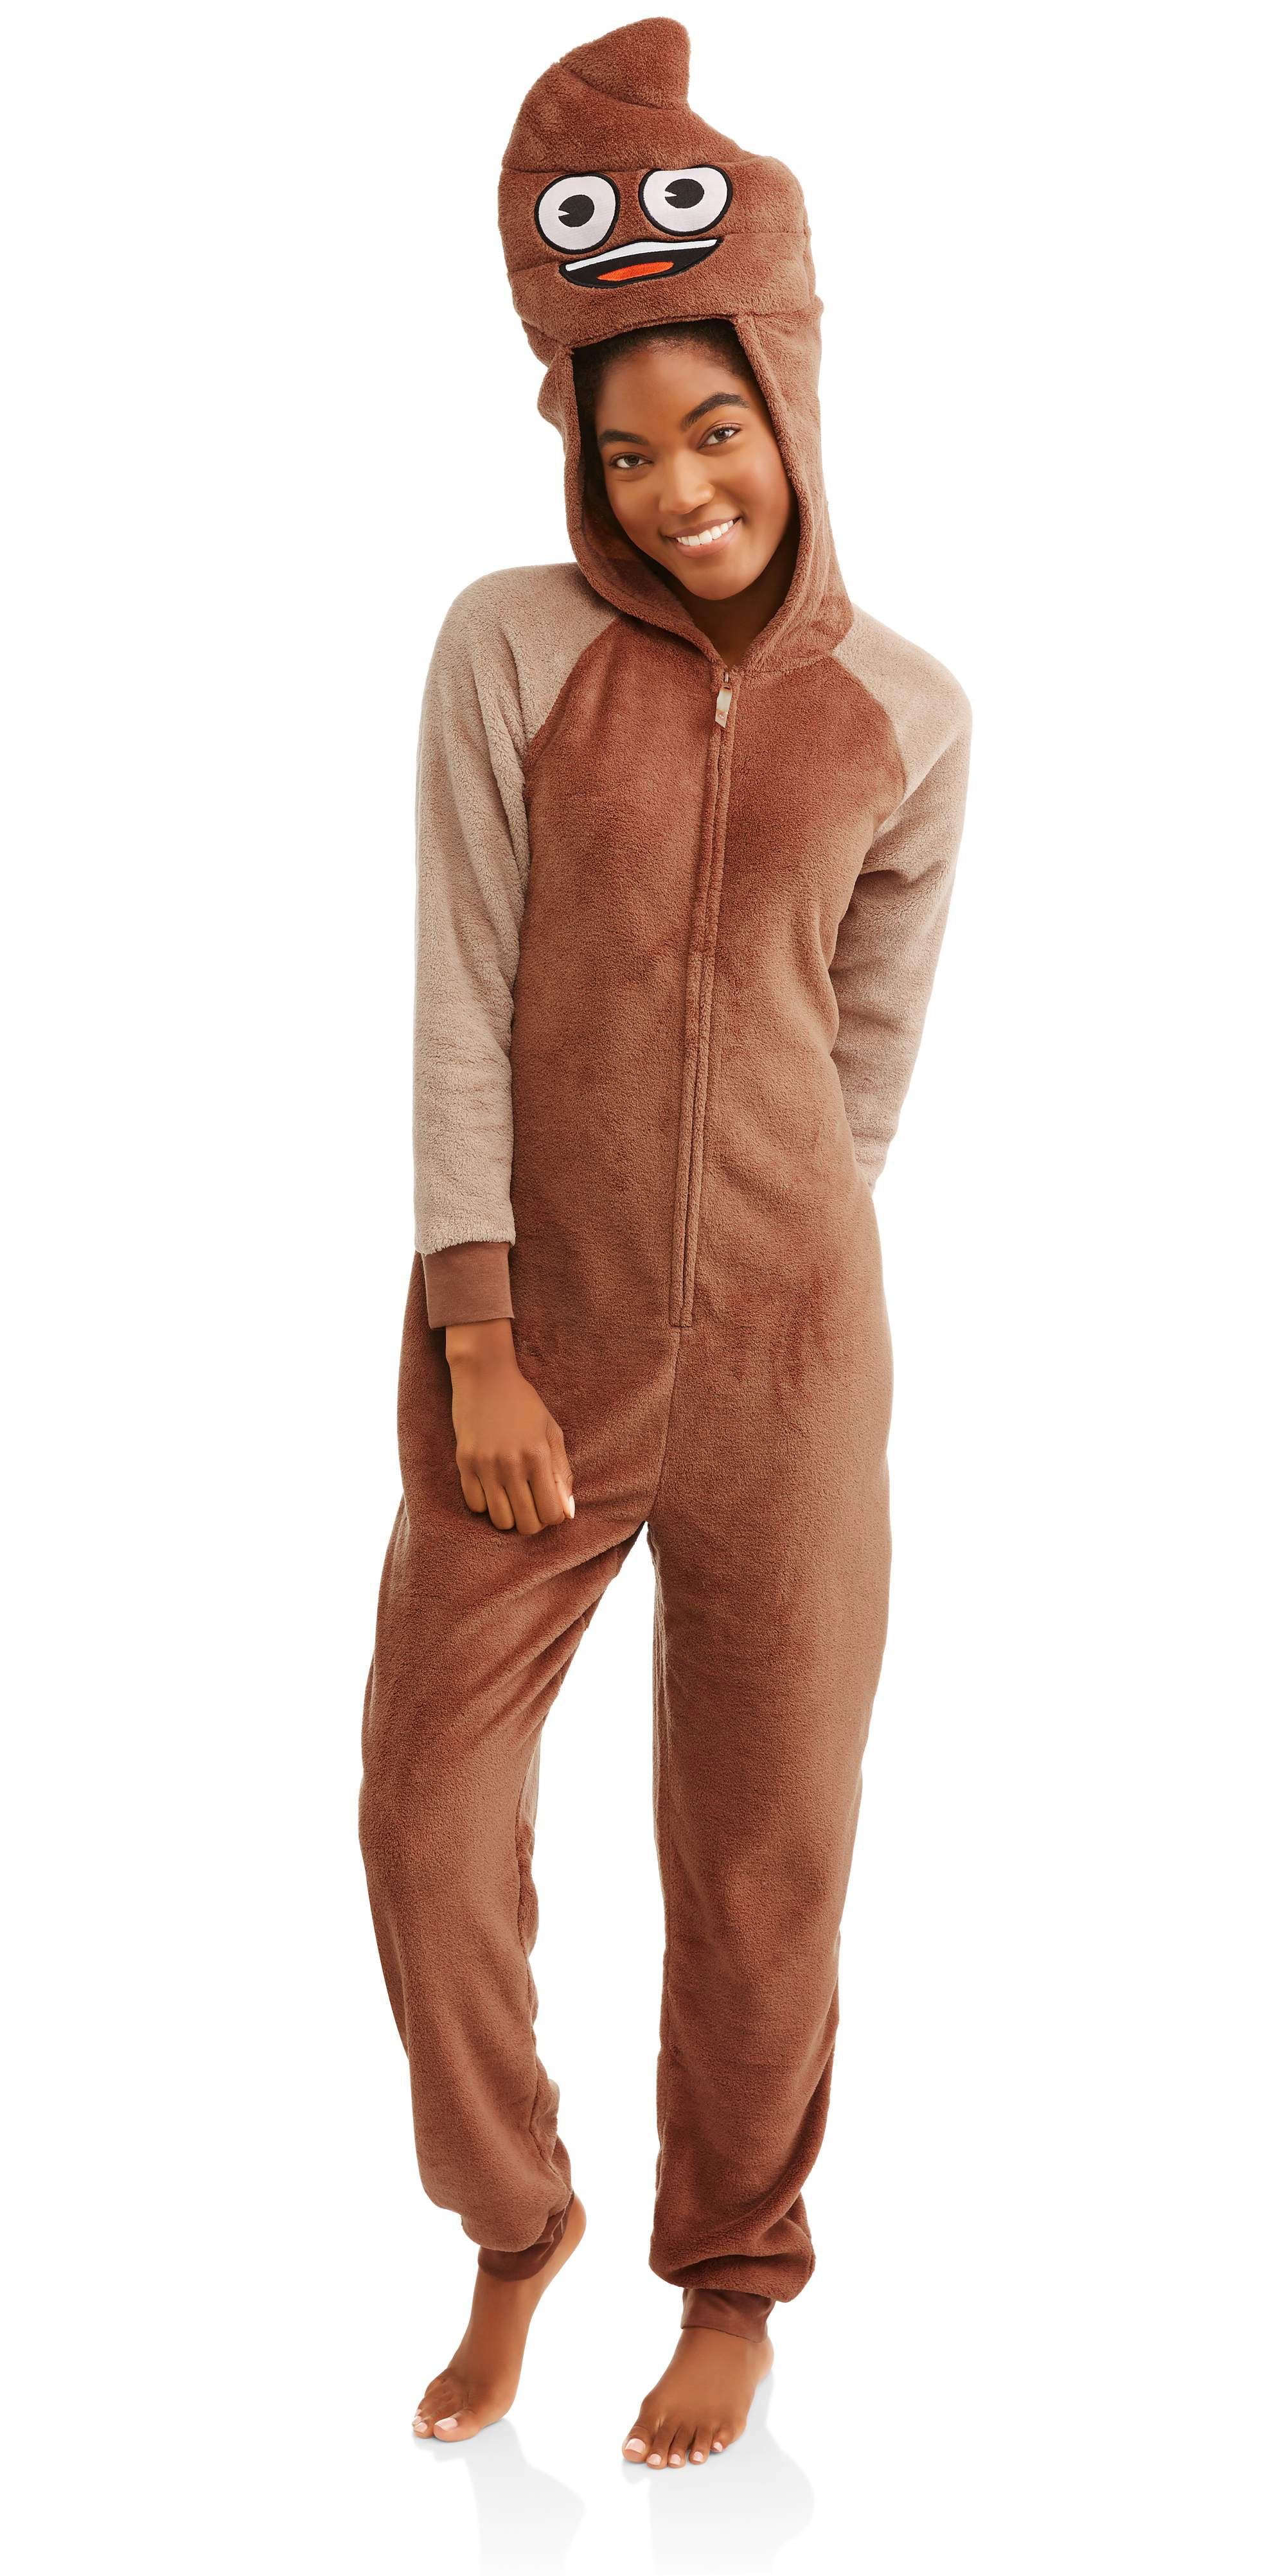 Hello Kitty Hooded S-M-XL Fleece Pajamas Union Suit One Piece Adult Jrs Women